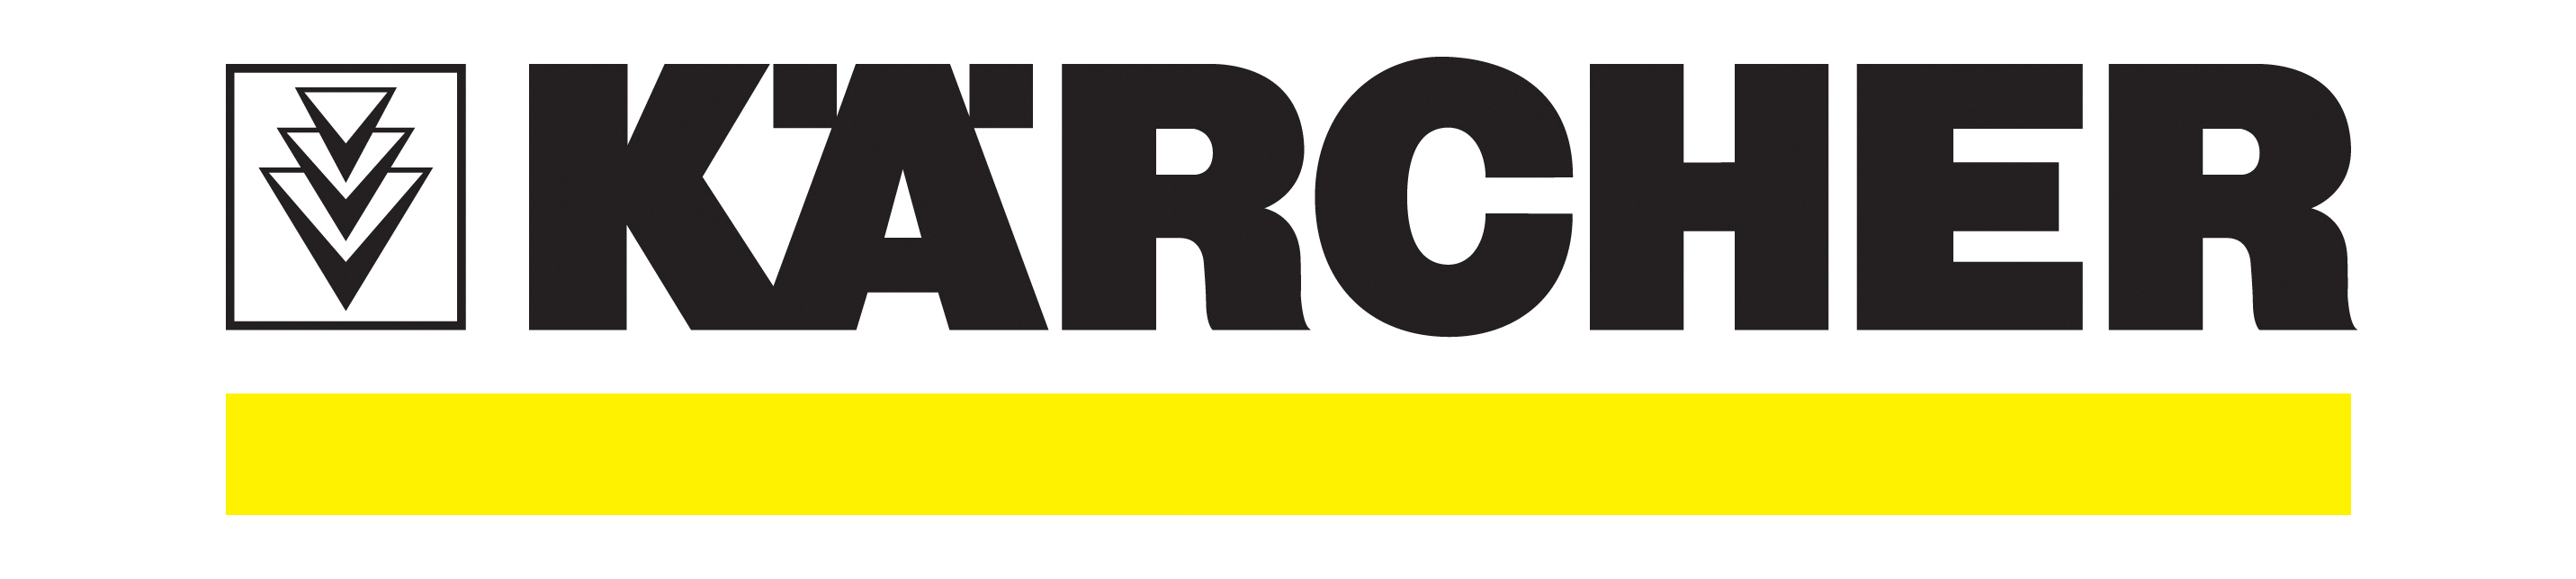 Kaercher_-_logo